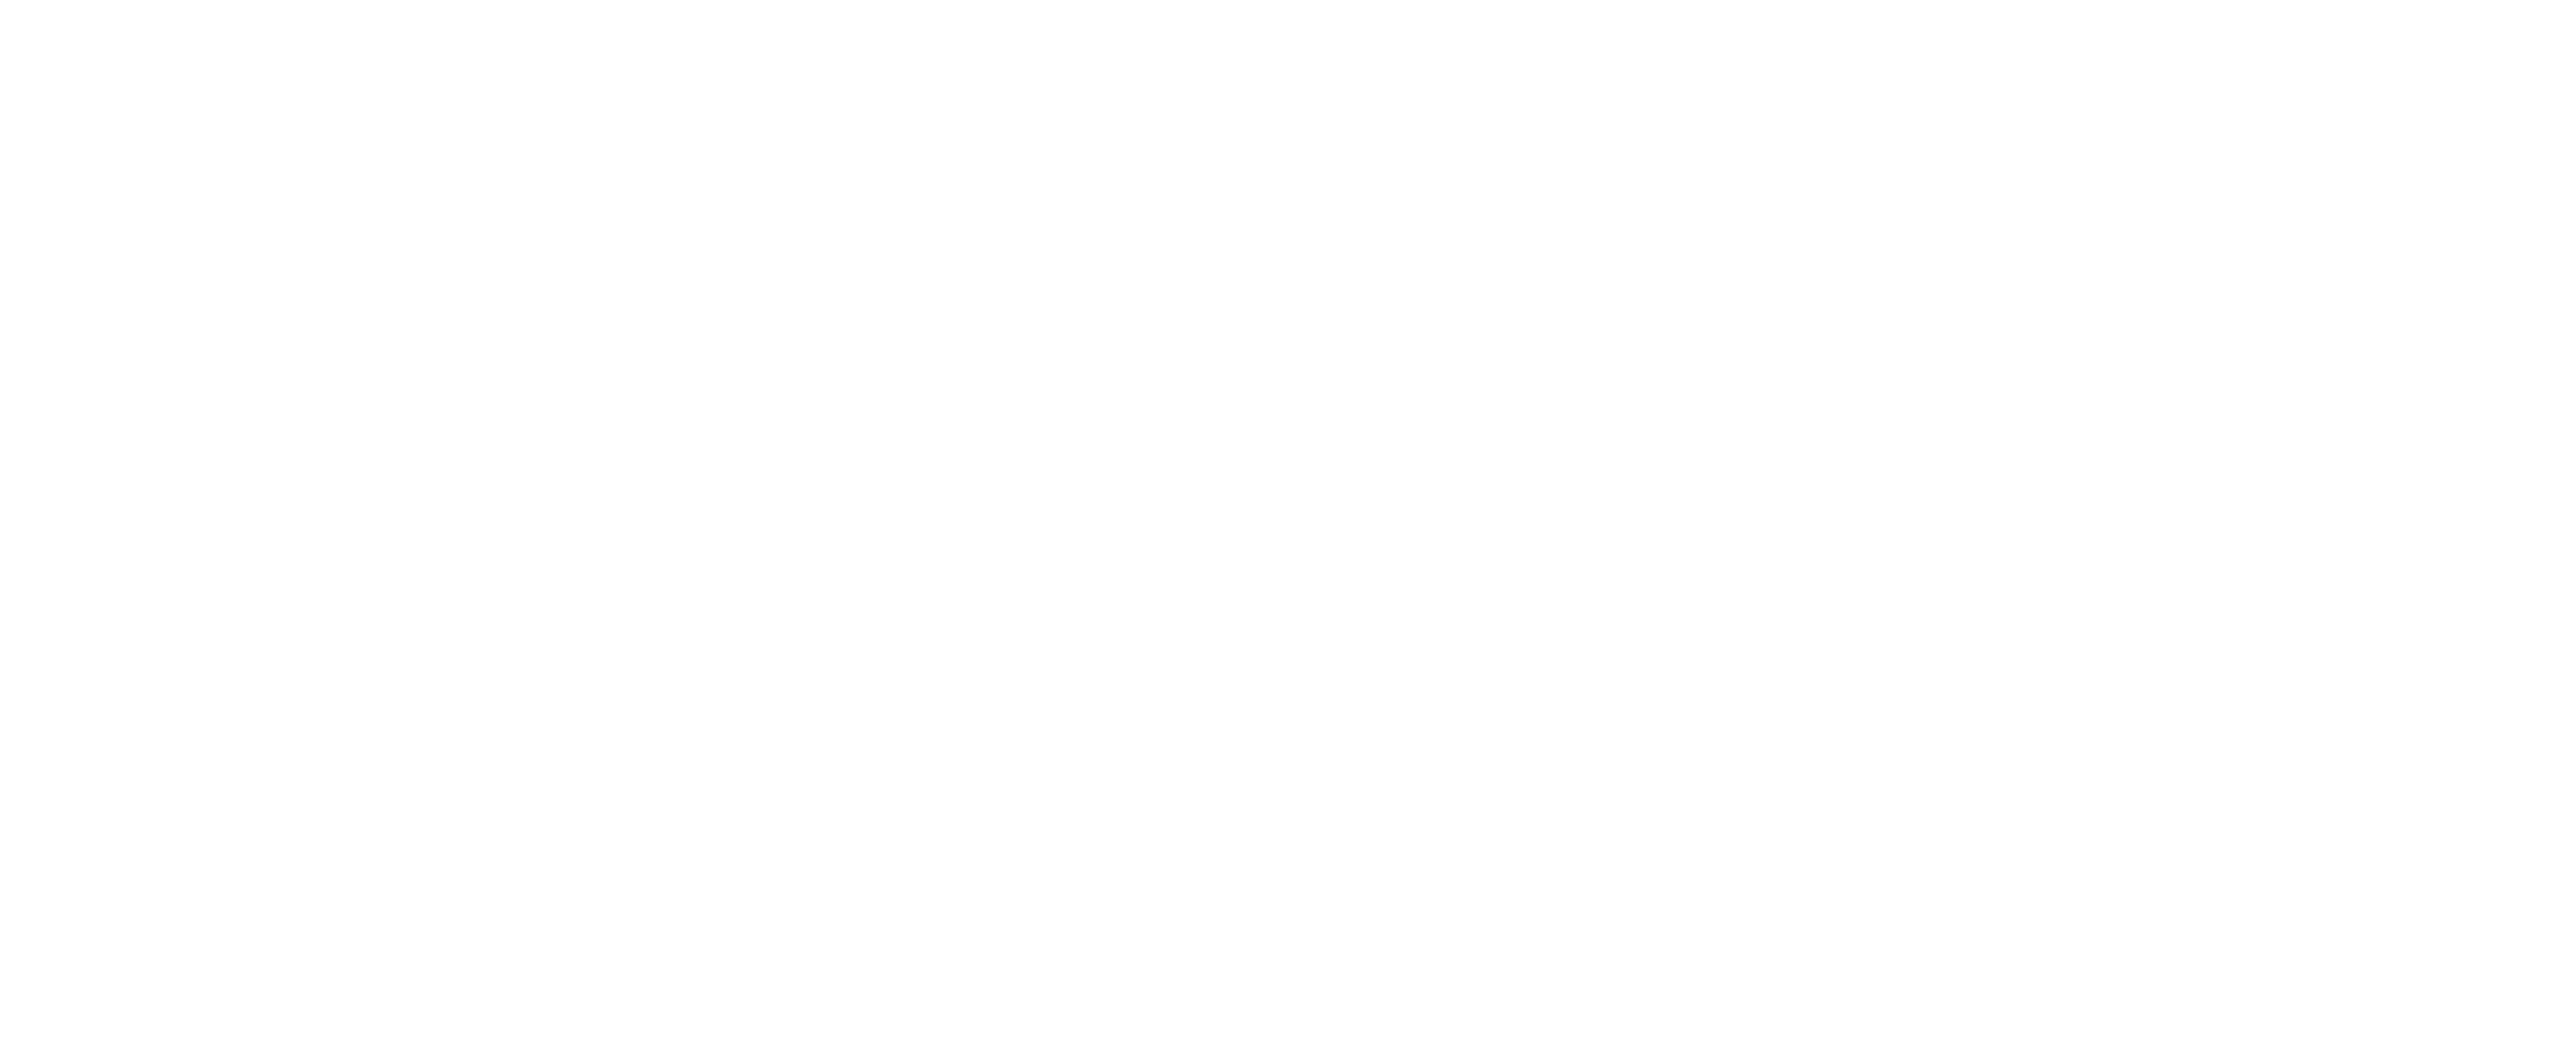 Eva Longoria: Searching for Mexico logo